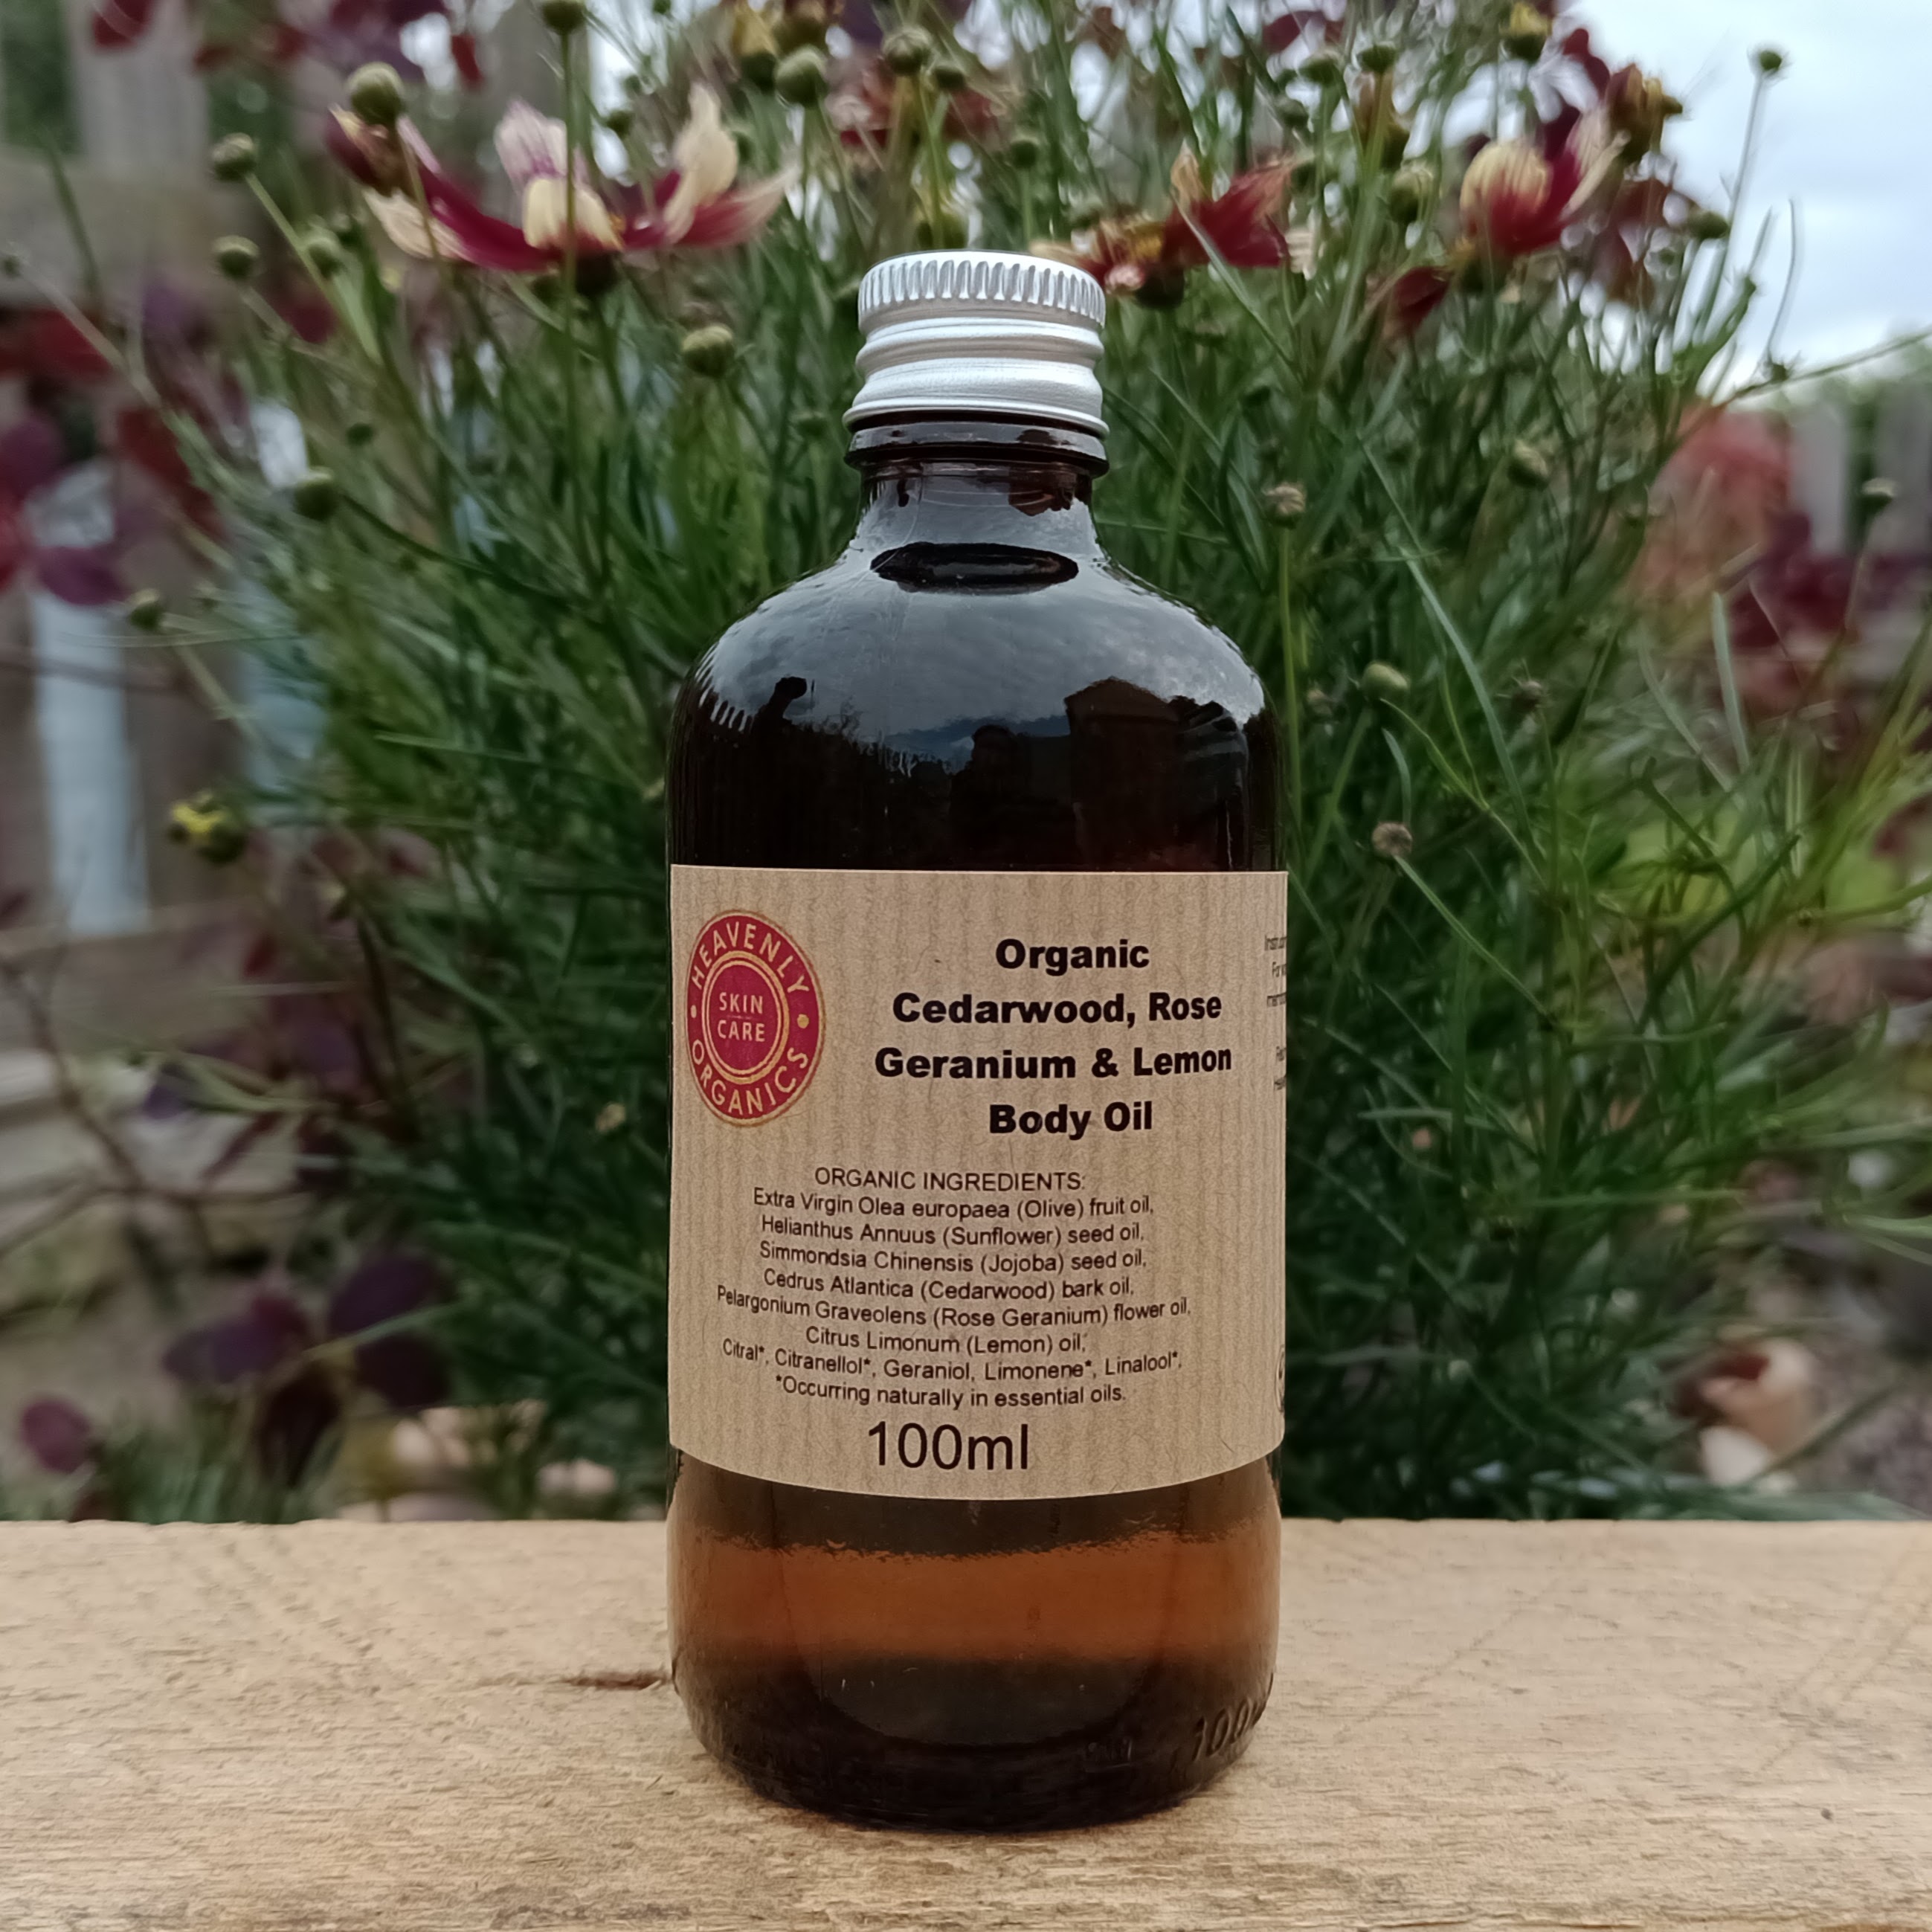 Organic Cedarwood, Rose Geranium & Lemon Body Oil